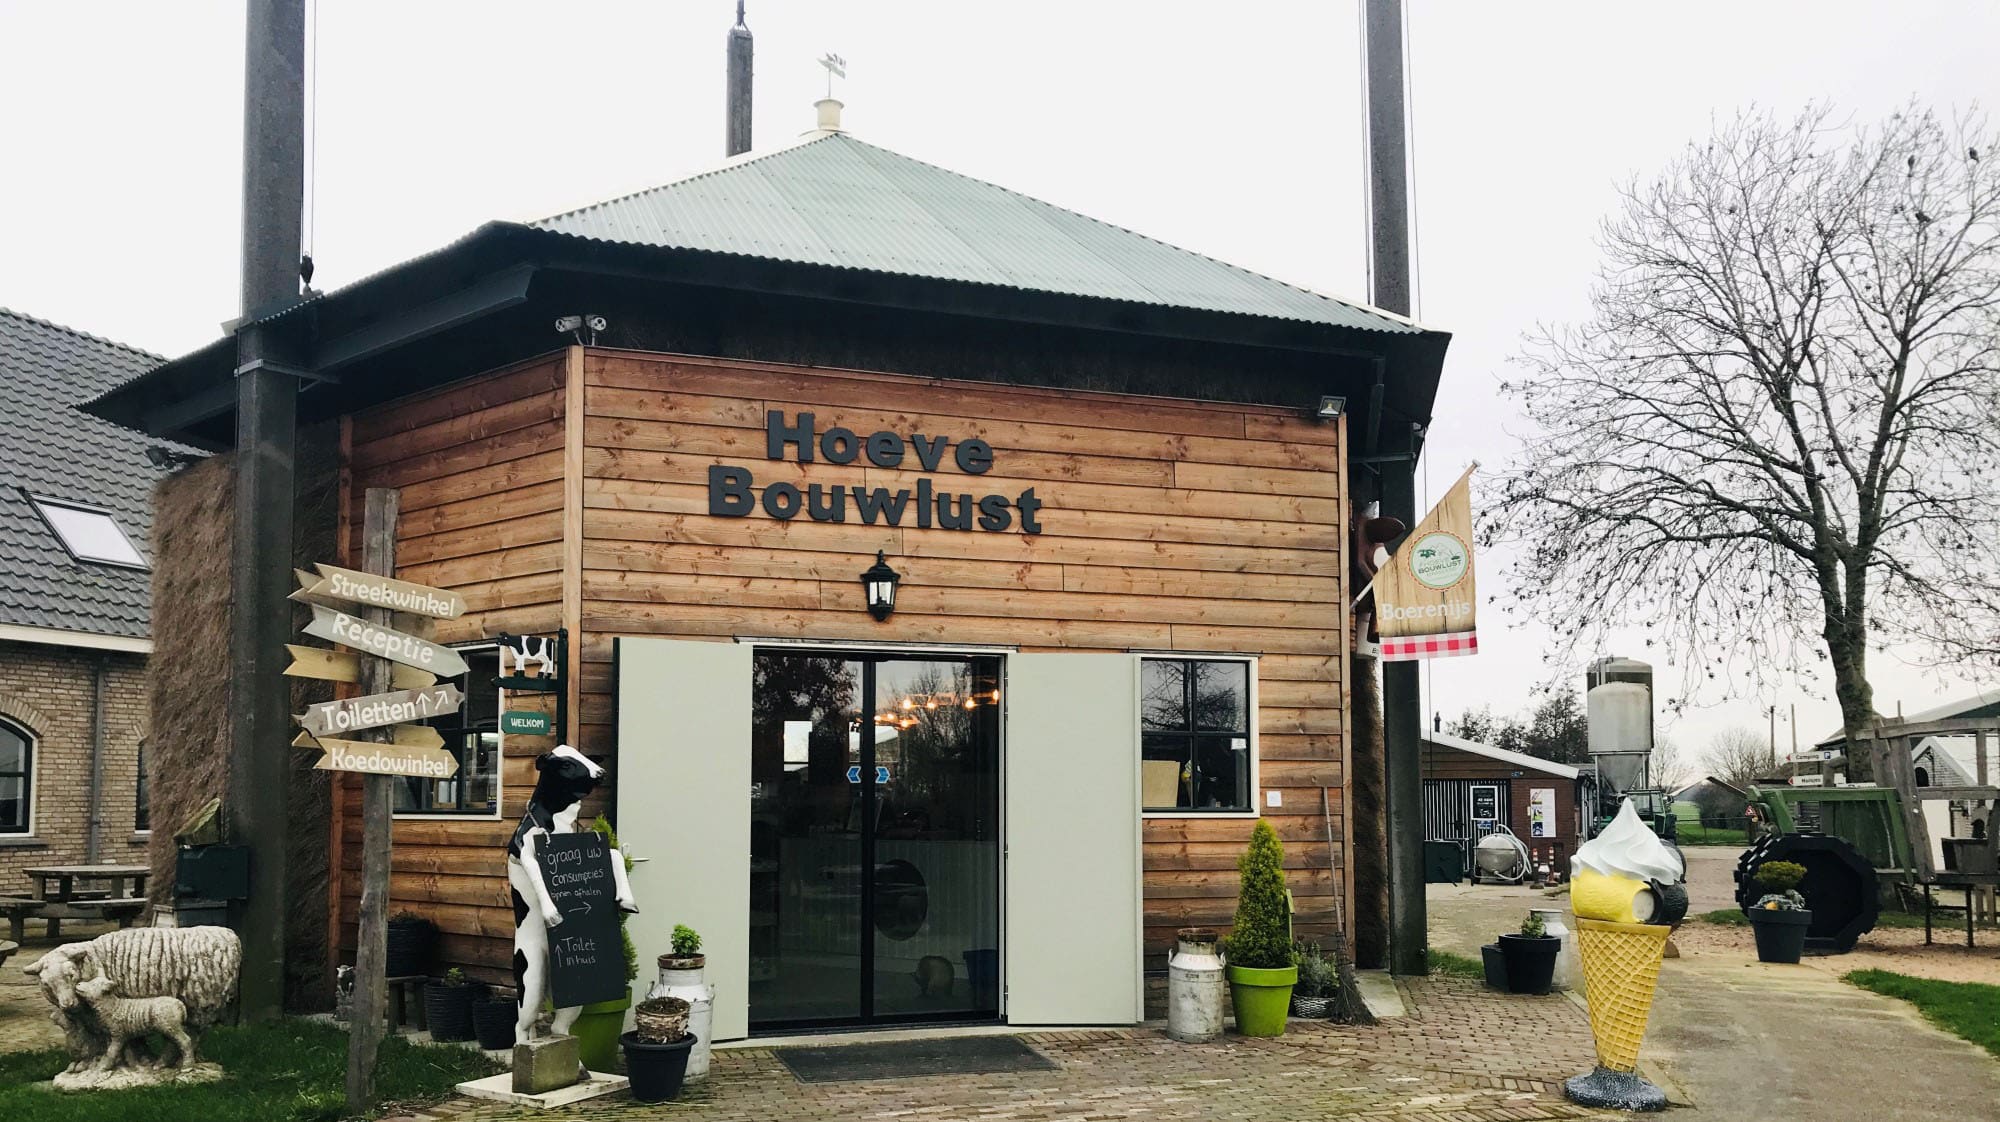 Hoeve Bouwlust Streekproducten winkel in oude hooiberg bij Hoeve Bouwlust